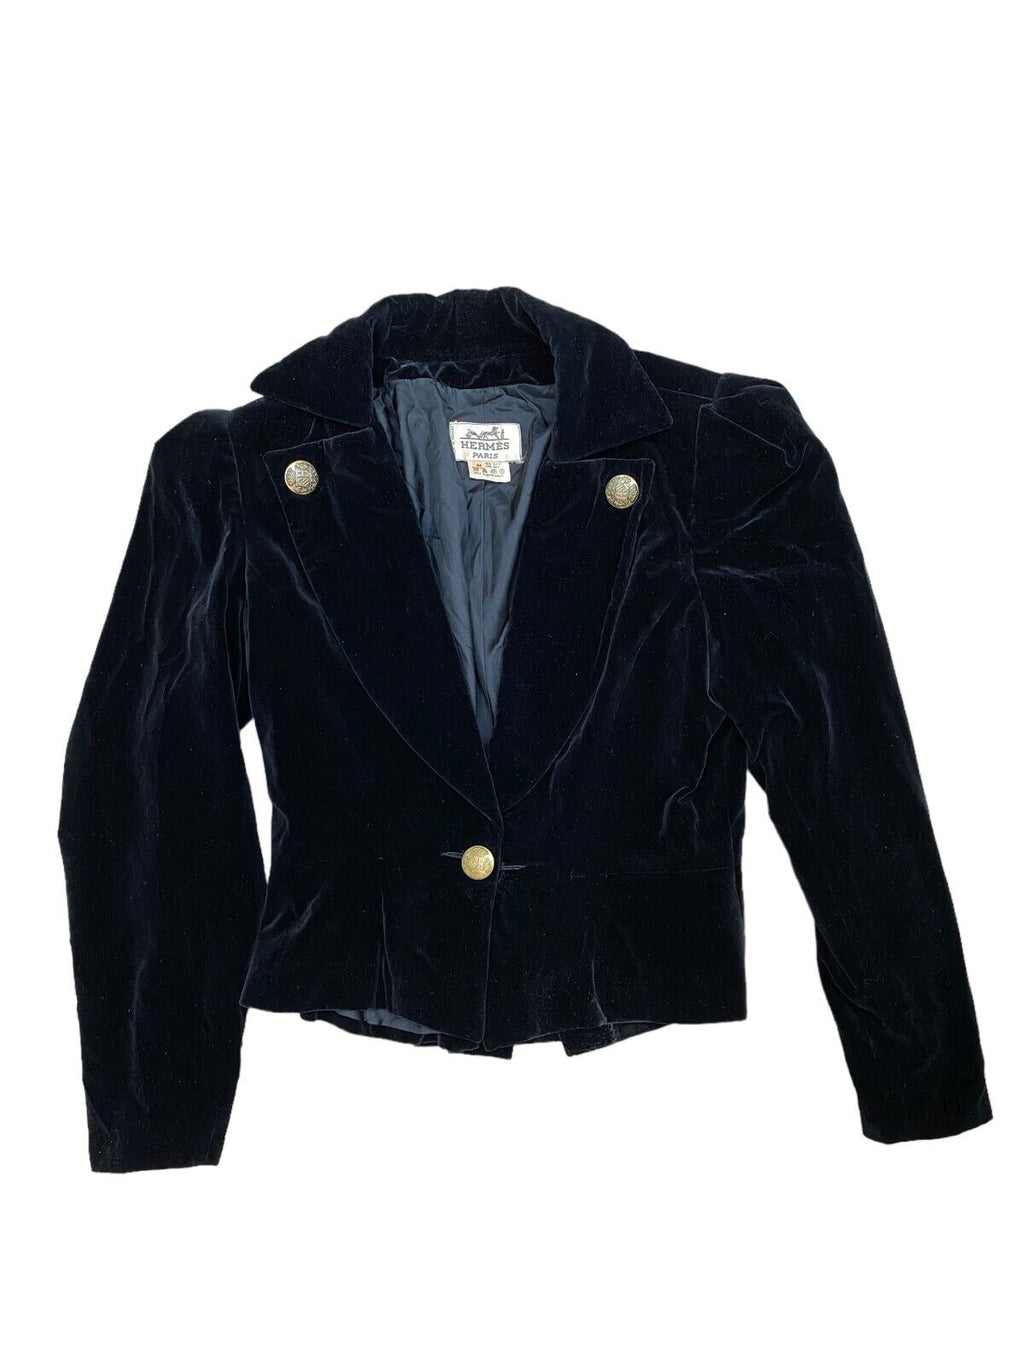 Black Velvet Corduroy Blazer Jacket  Size 42 fits L